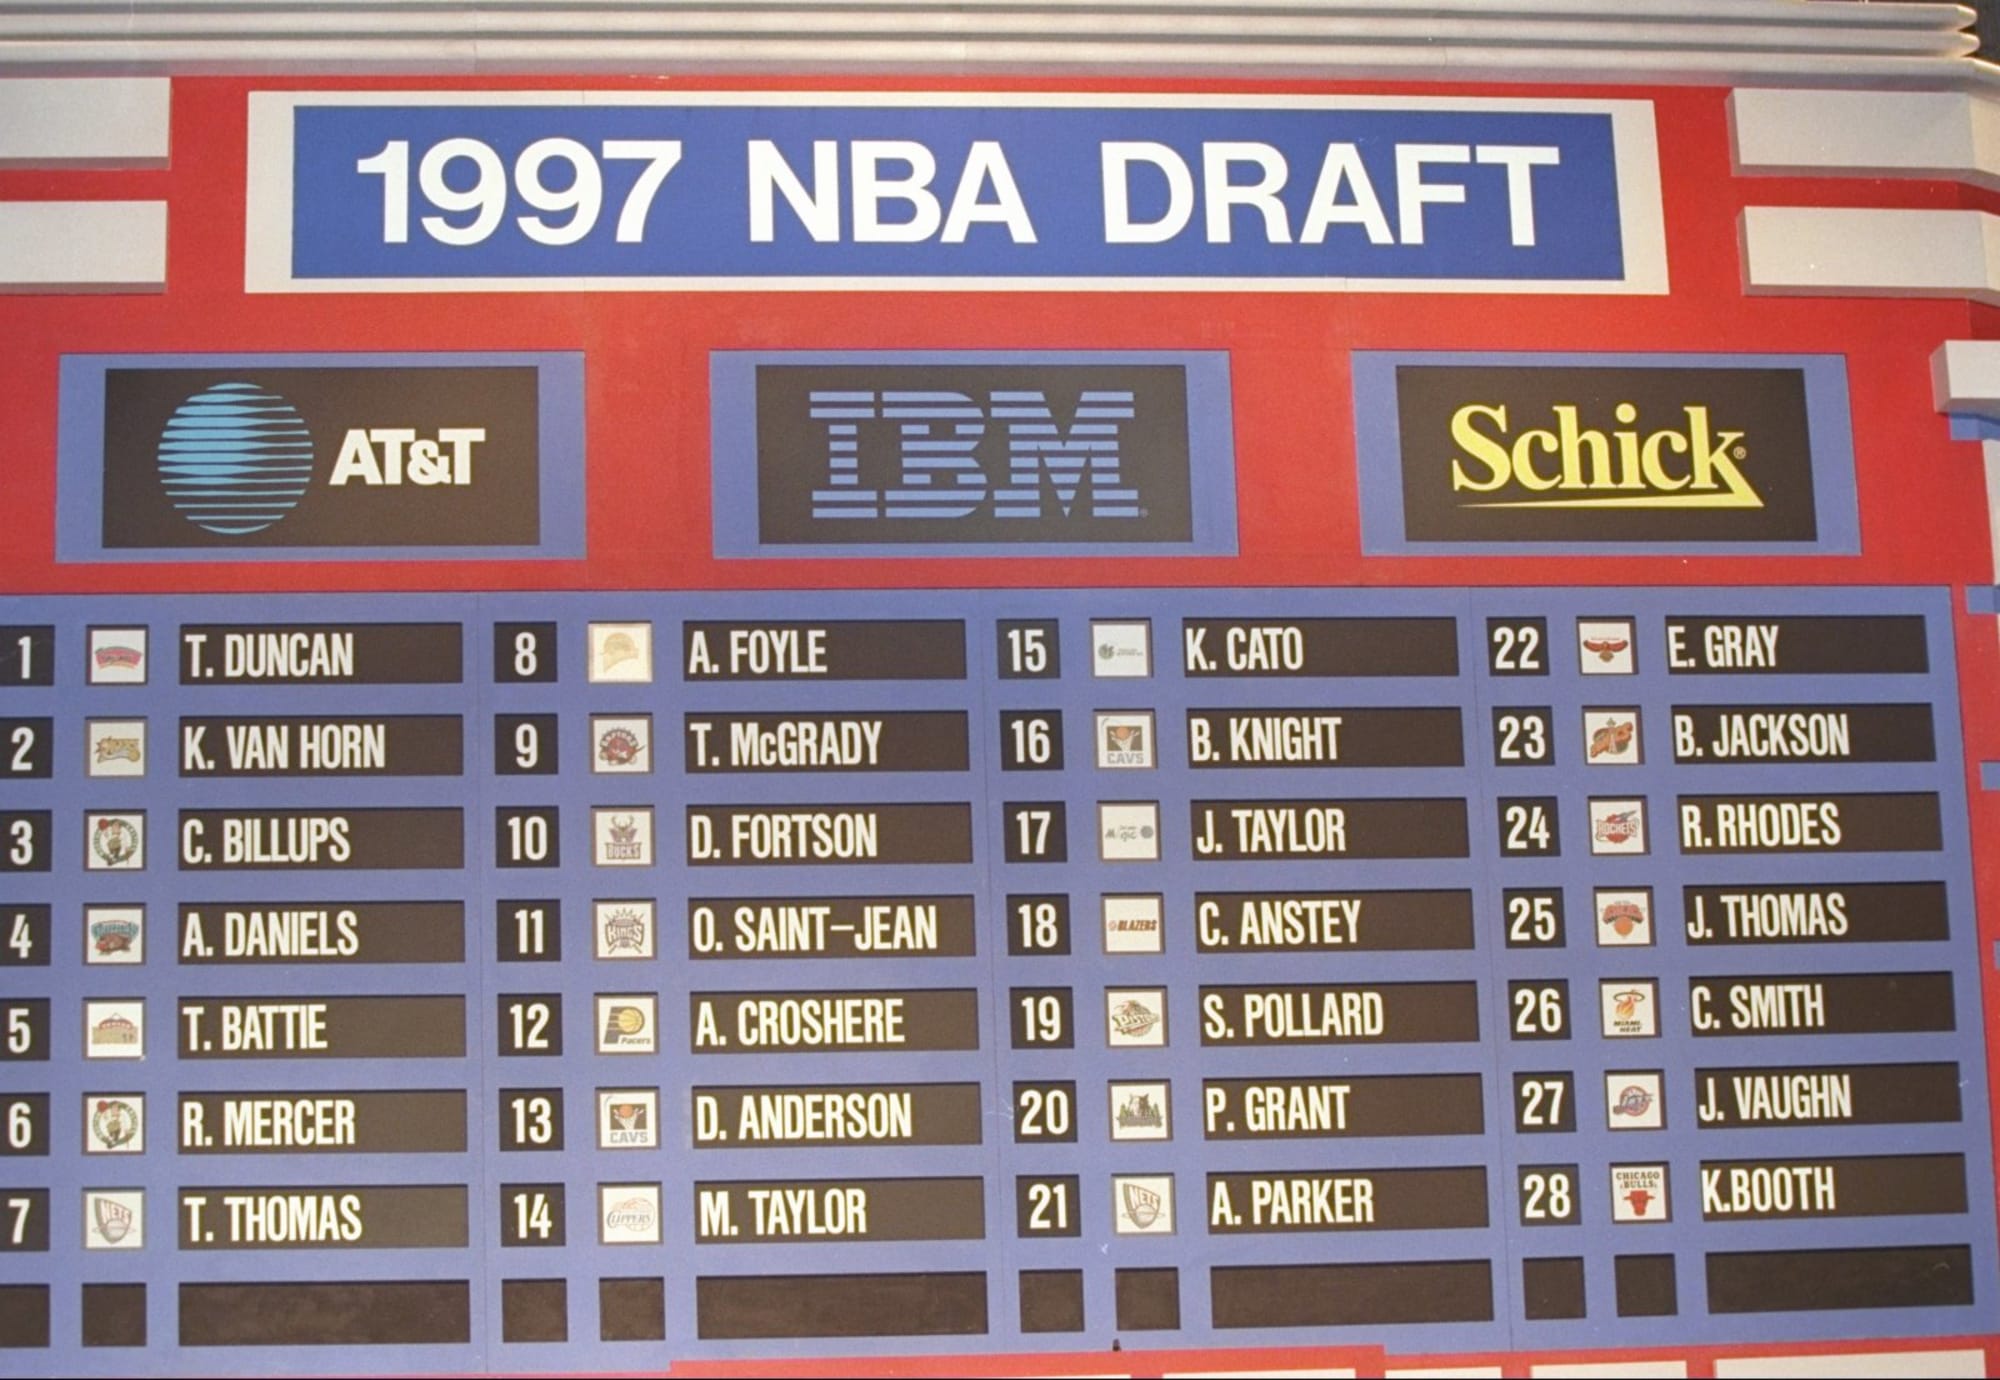 Redrafting the impactful 1997 NBA Draft Lottery picks